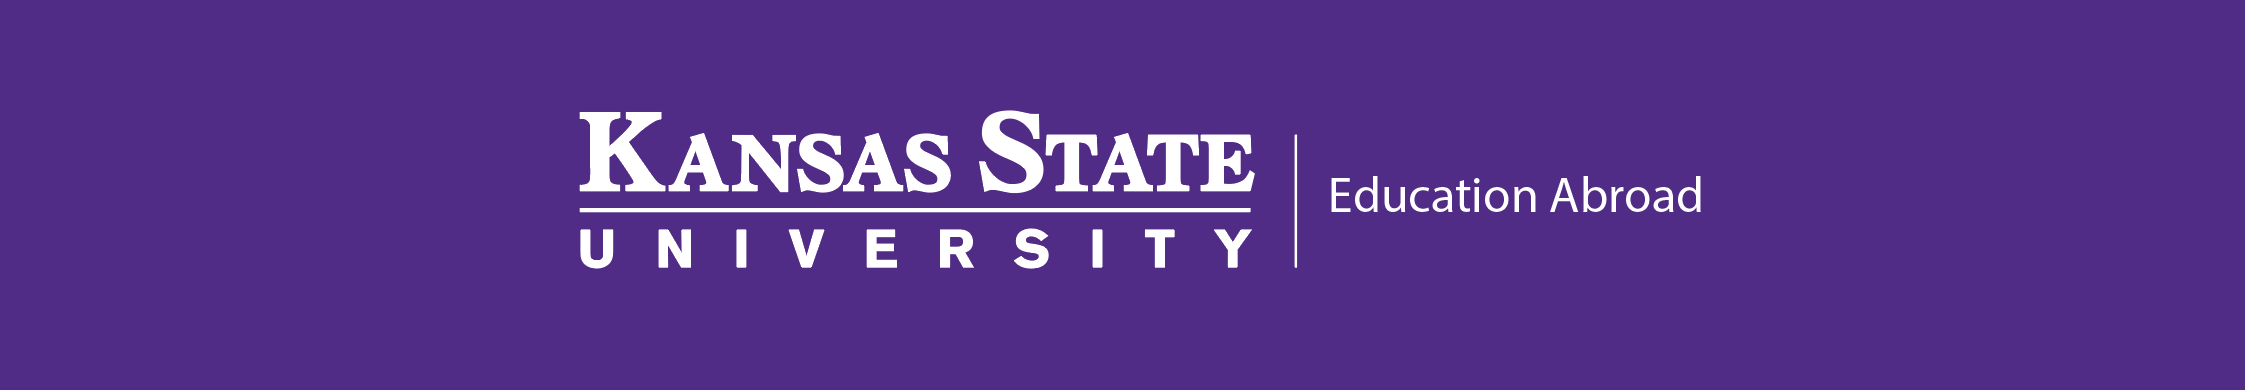 Education Abroad - Kansas State University